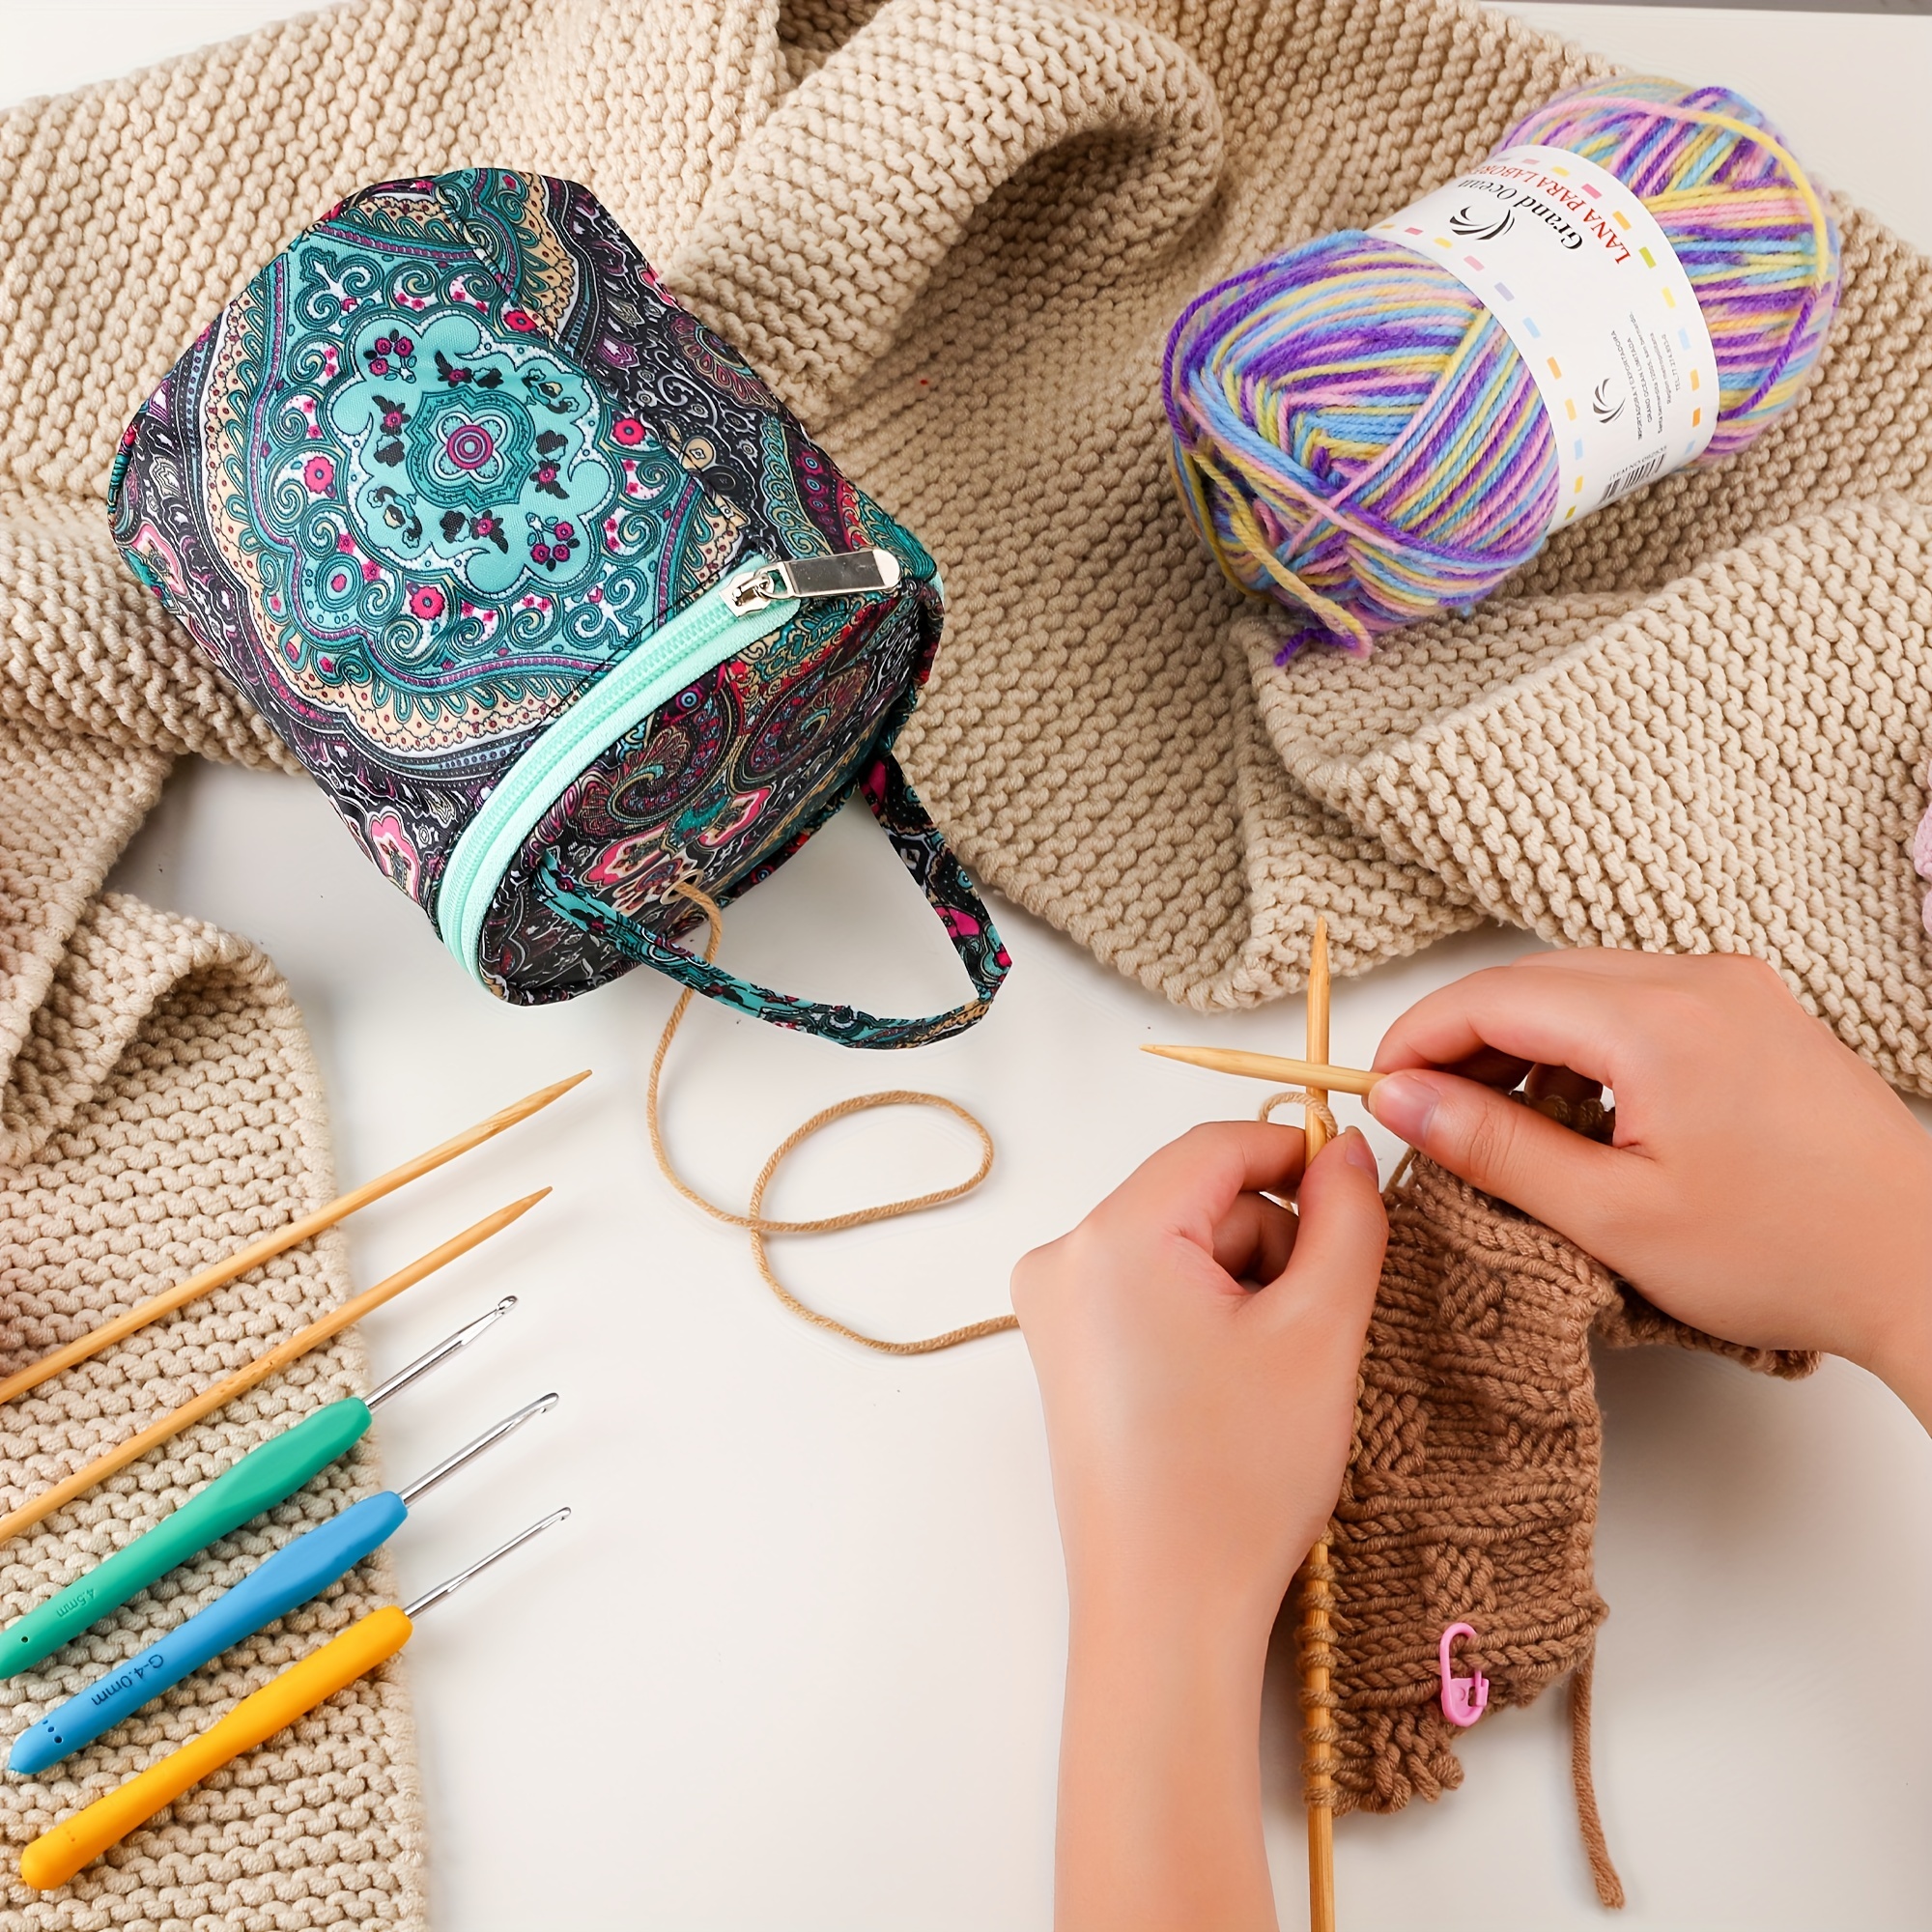 1pc Round Knitted Storage Bag, Knitted Crochet Yarn Bag, Crochet Thread  Organizer Bag, For Holding Yarn Ball, Crochet Storage Kit, Dustproof Zipper  Bag, Gift For Mom, Gift For Wife